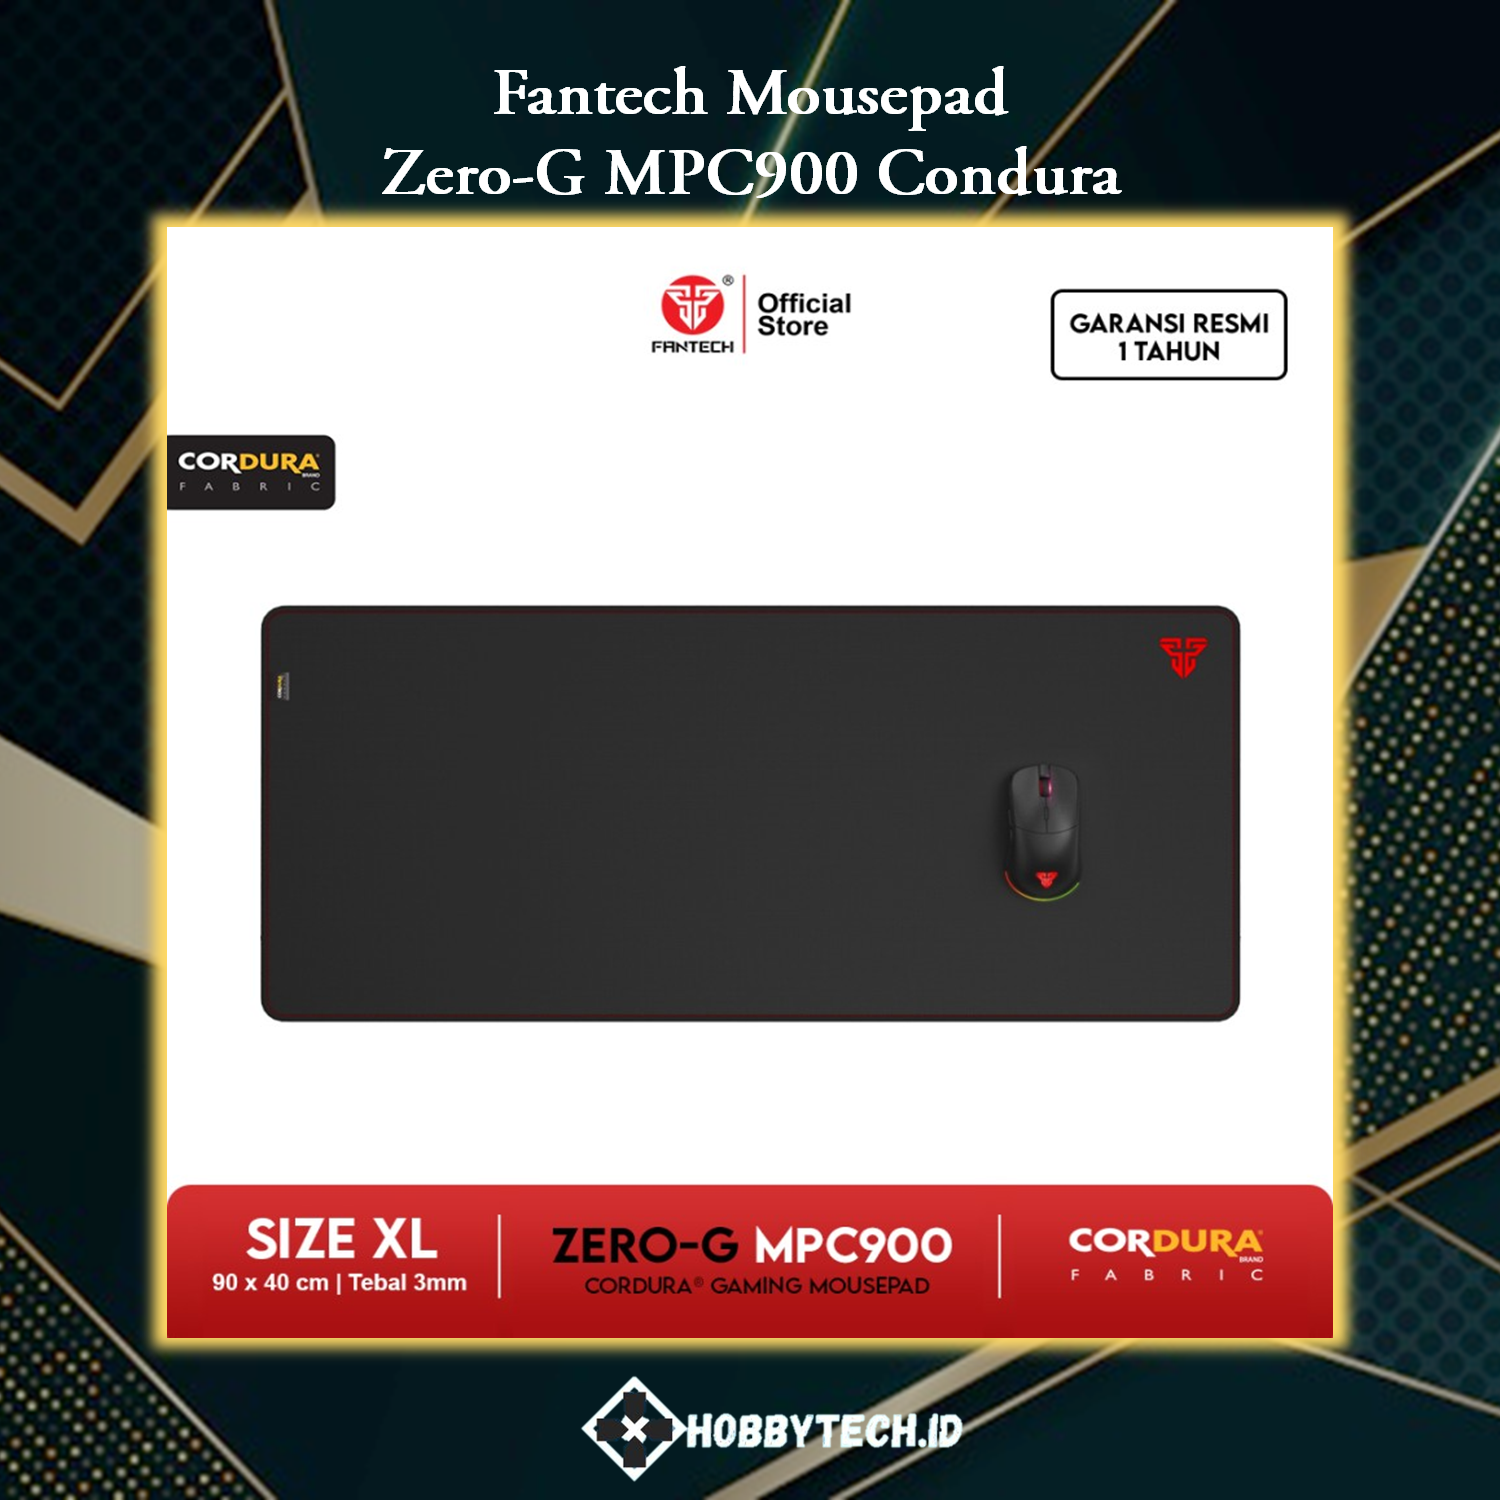 Fantech ZERO-G MPC900 Cordura® Mousepad Gaming Size XL